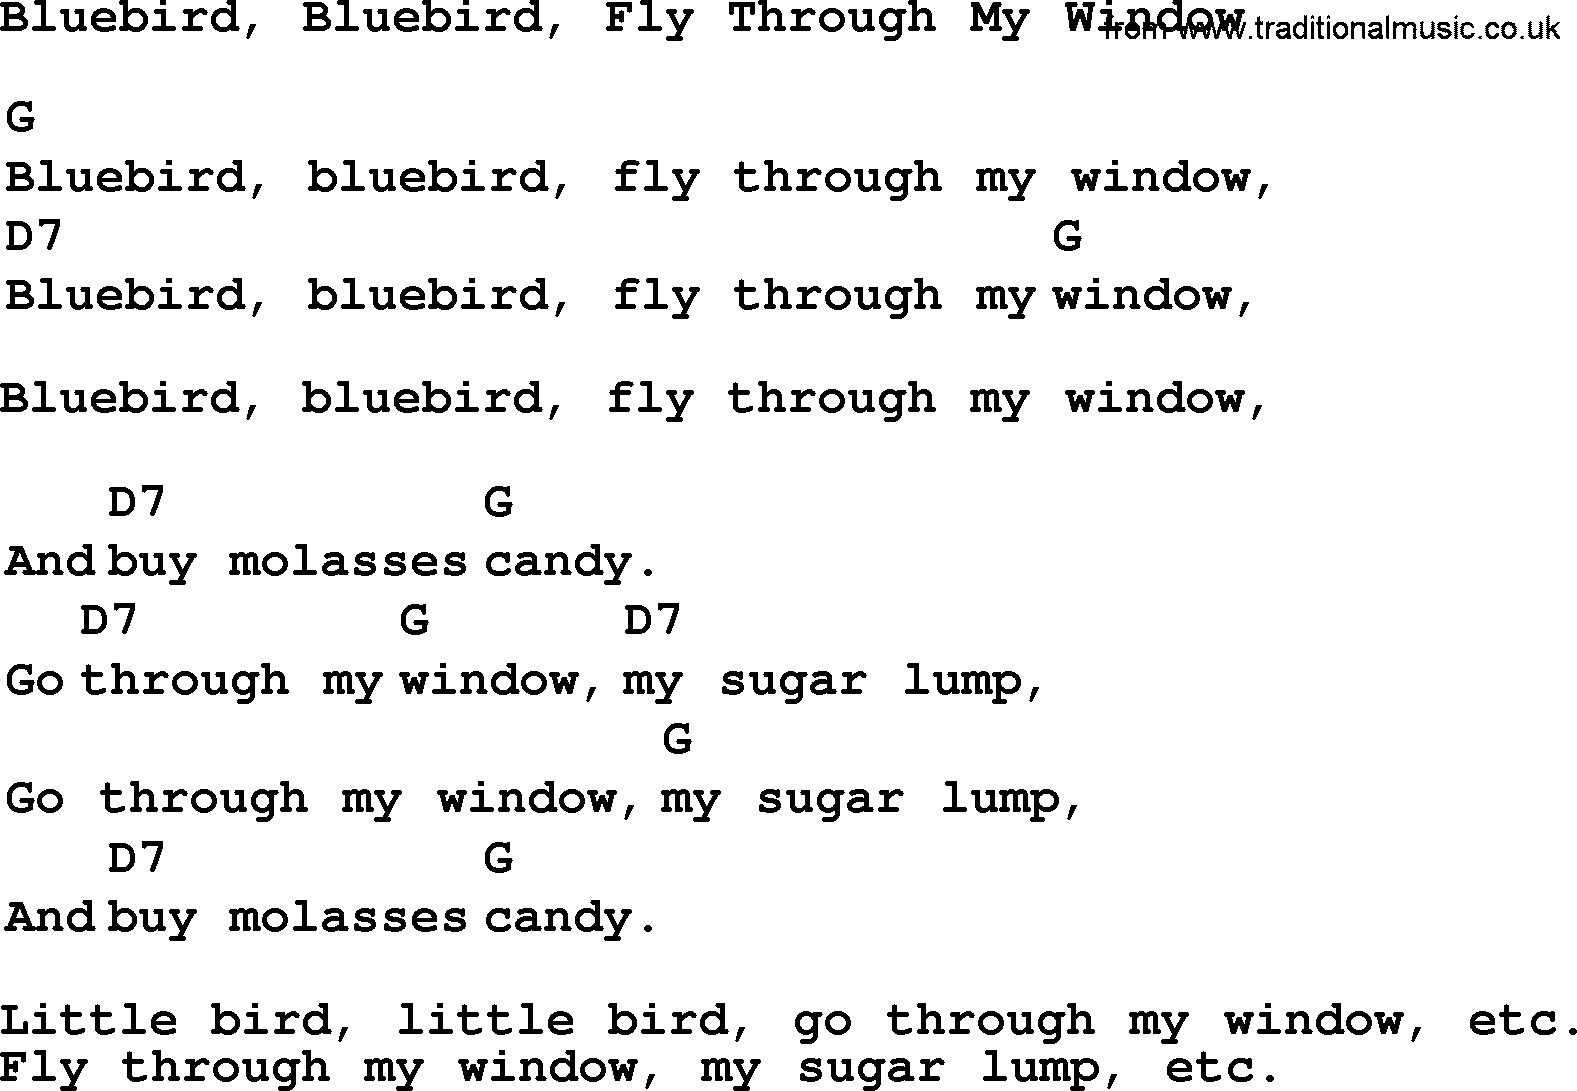 Top 1000 Most Popular Folk and Old-time Songs: Bluebird, Bluebird, Fly Through My Window, lyrics and chords